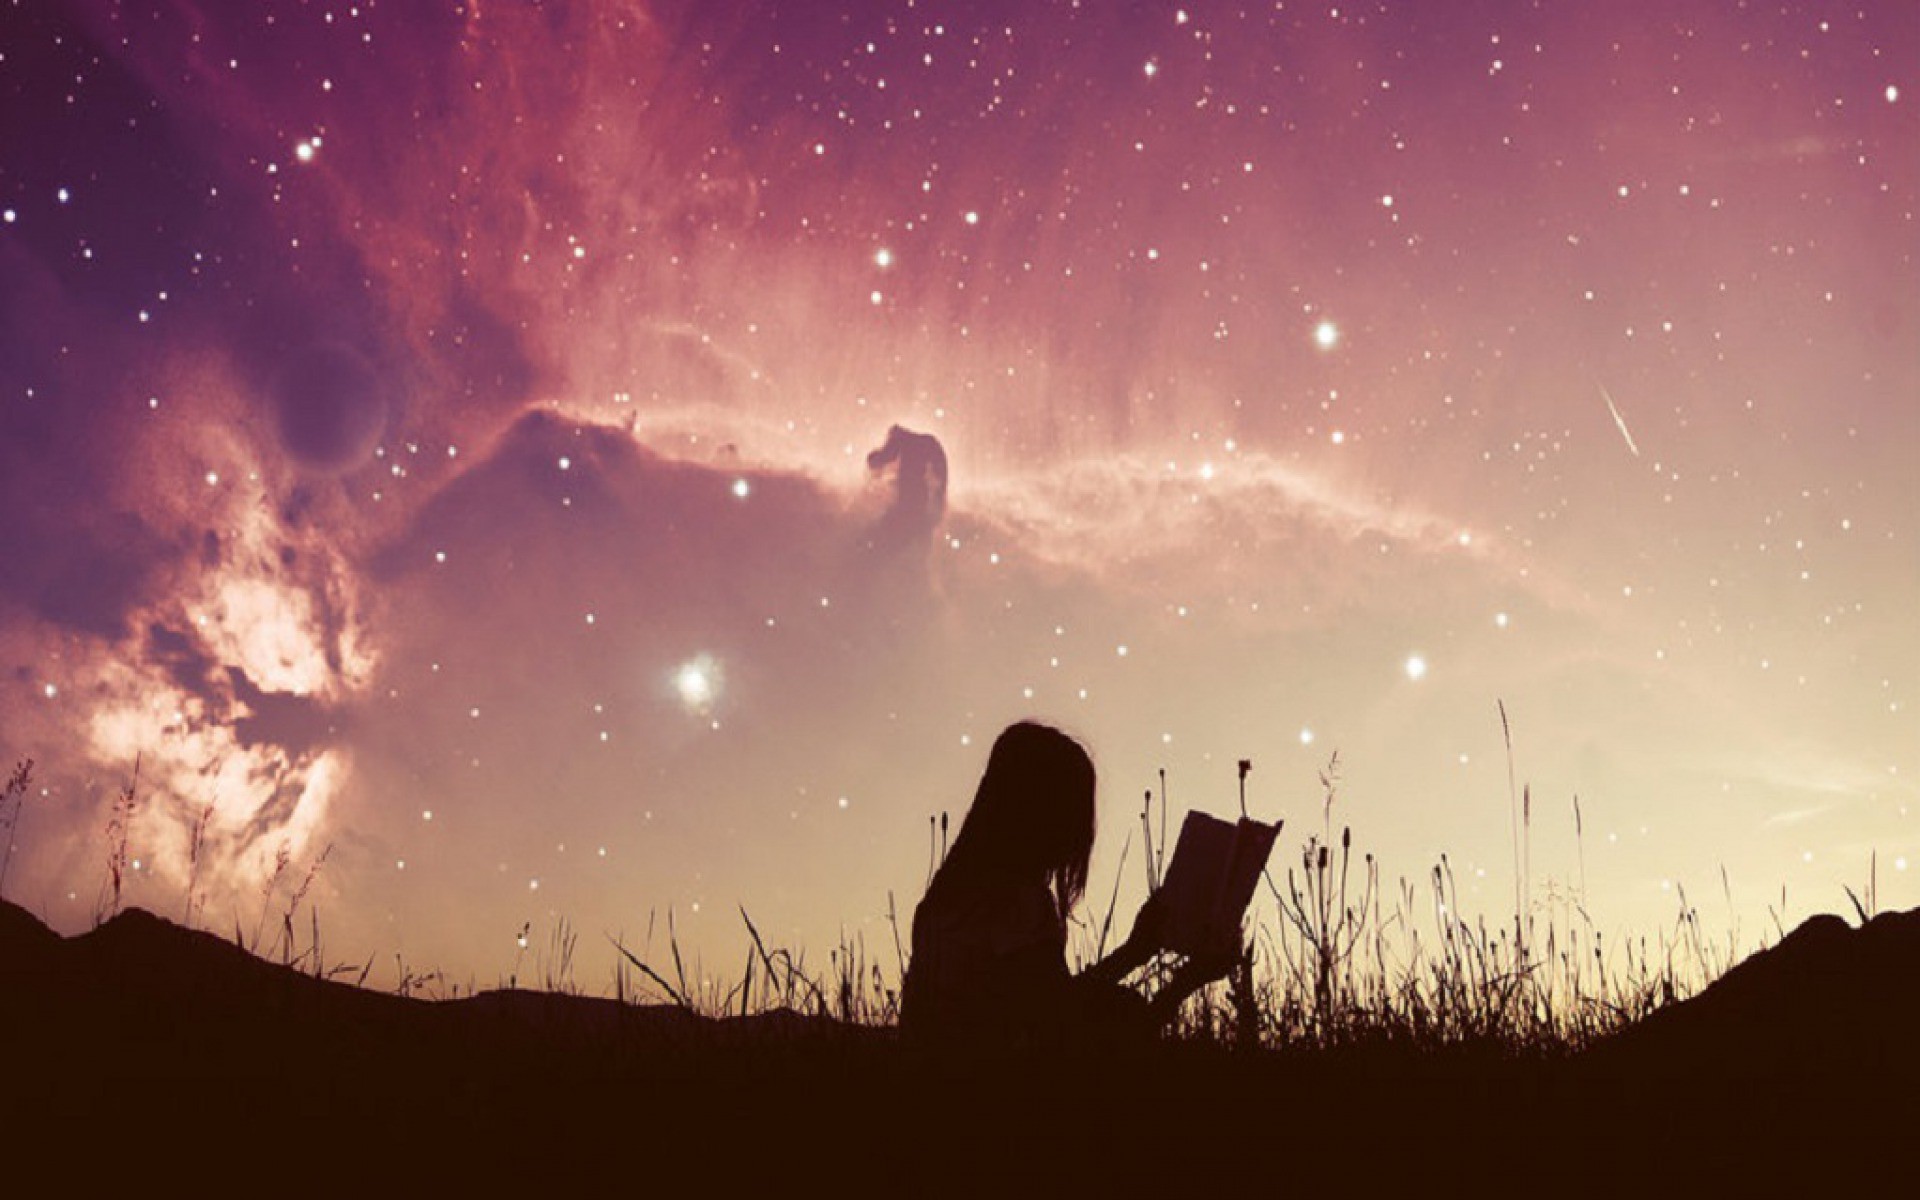 Your dream. Силуэт на фоне звездного неба. Девочка на фоне звездного неба. Девушка на фоне звездного неба. Девушка на фоне ночного неба.